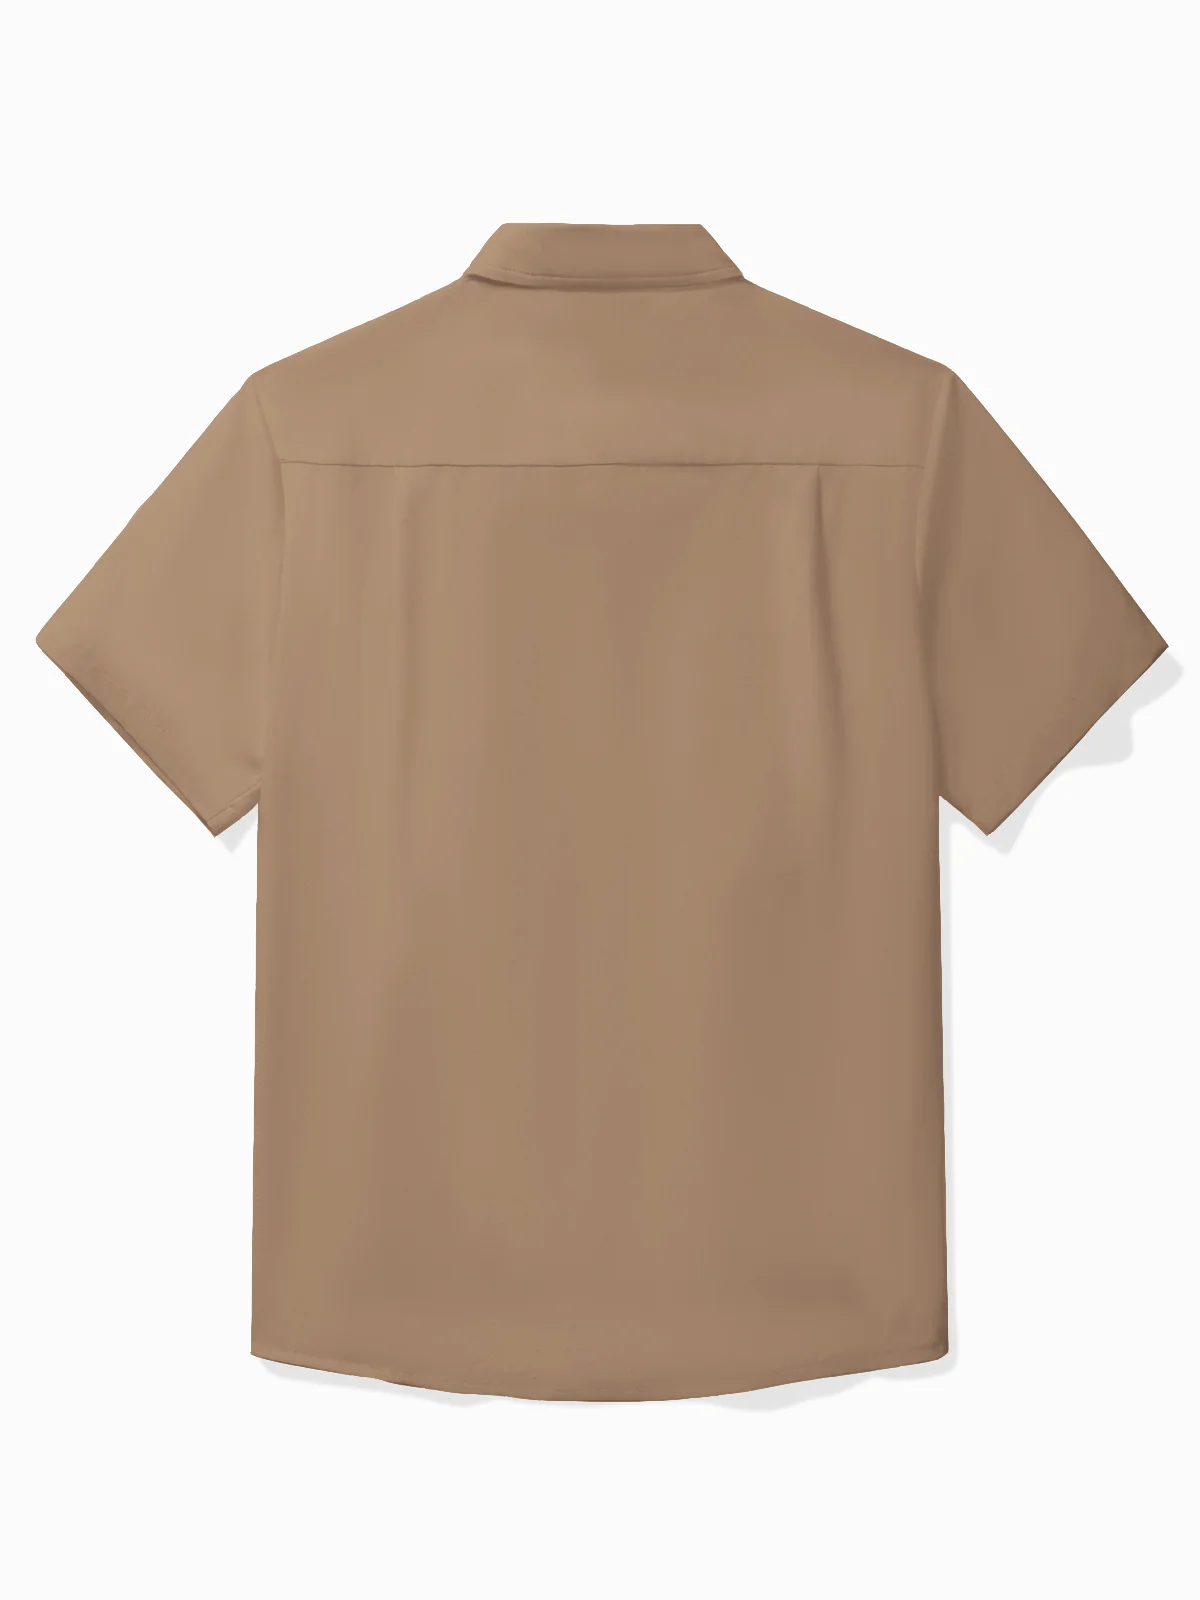 Royaura® Vintage Bowling Crimes & Cocktails Tattoo Print Chest Pocket Shirt Plus Size Men's Shirt